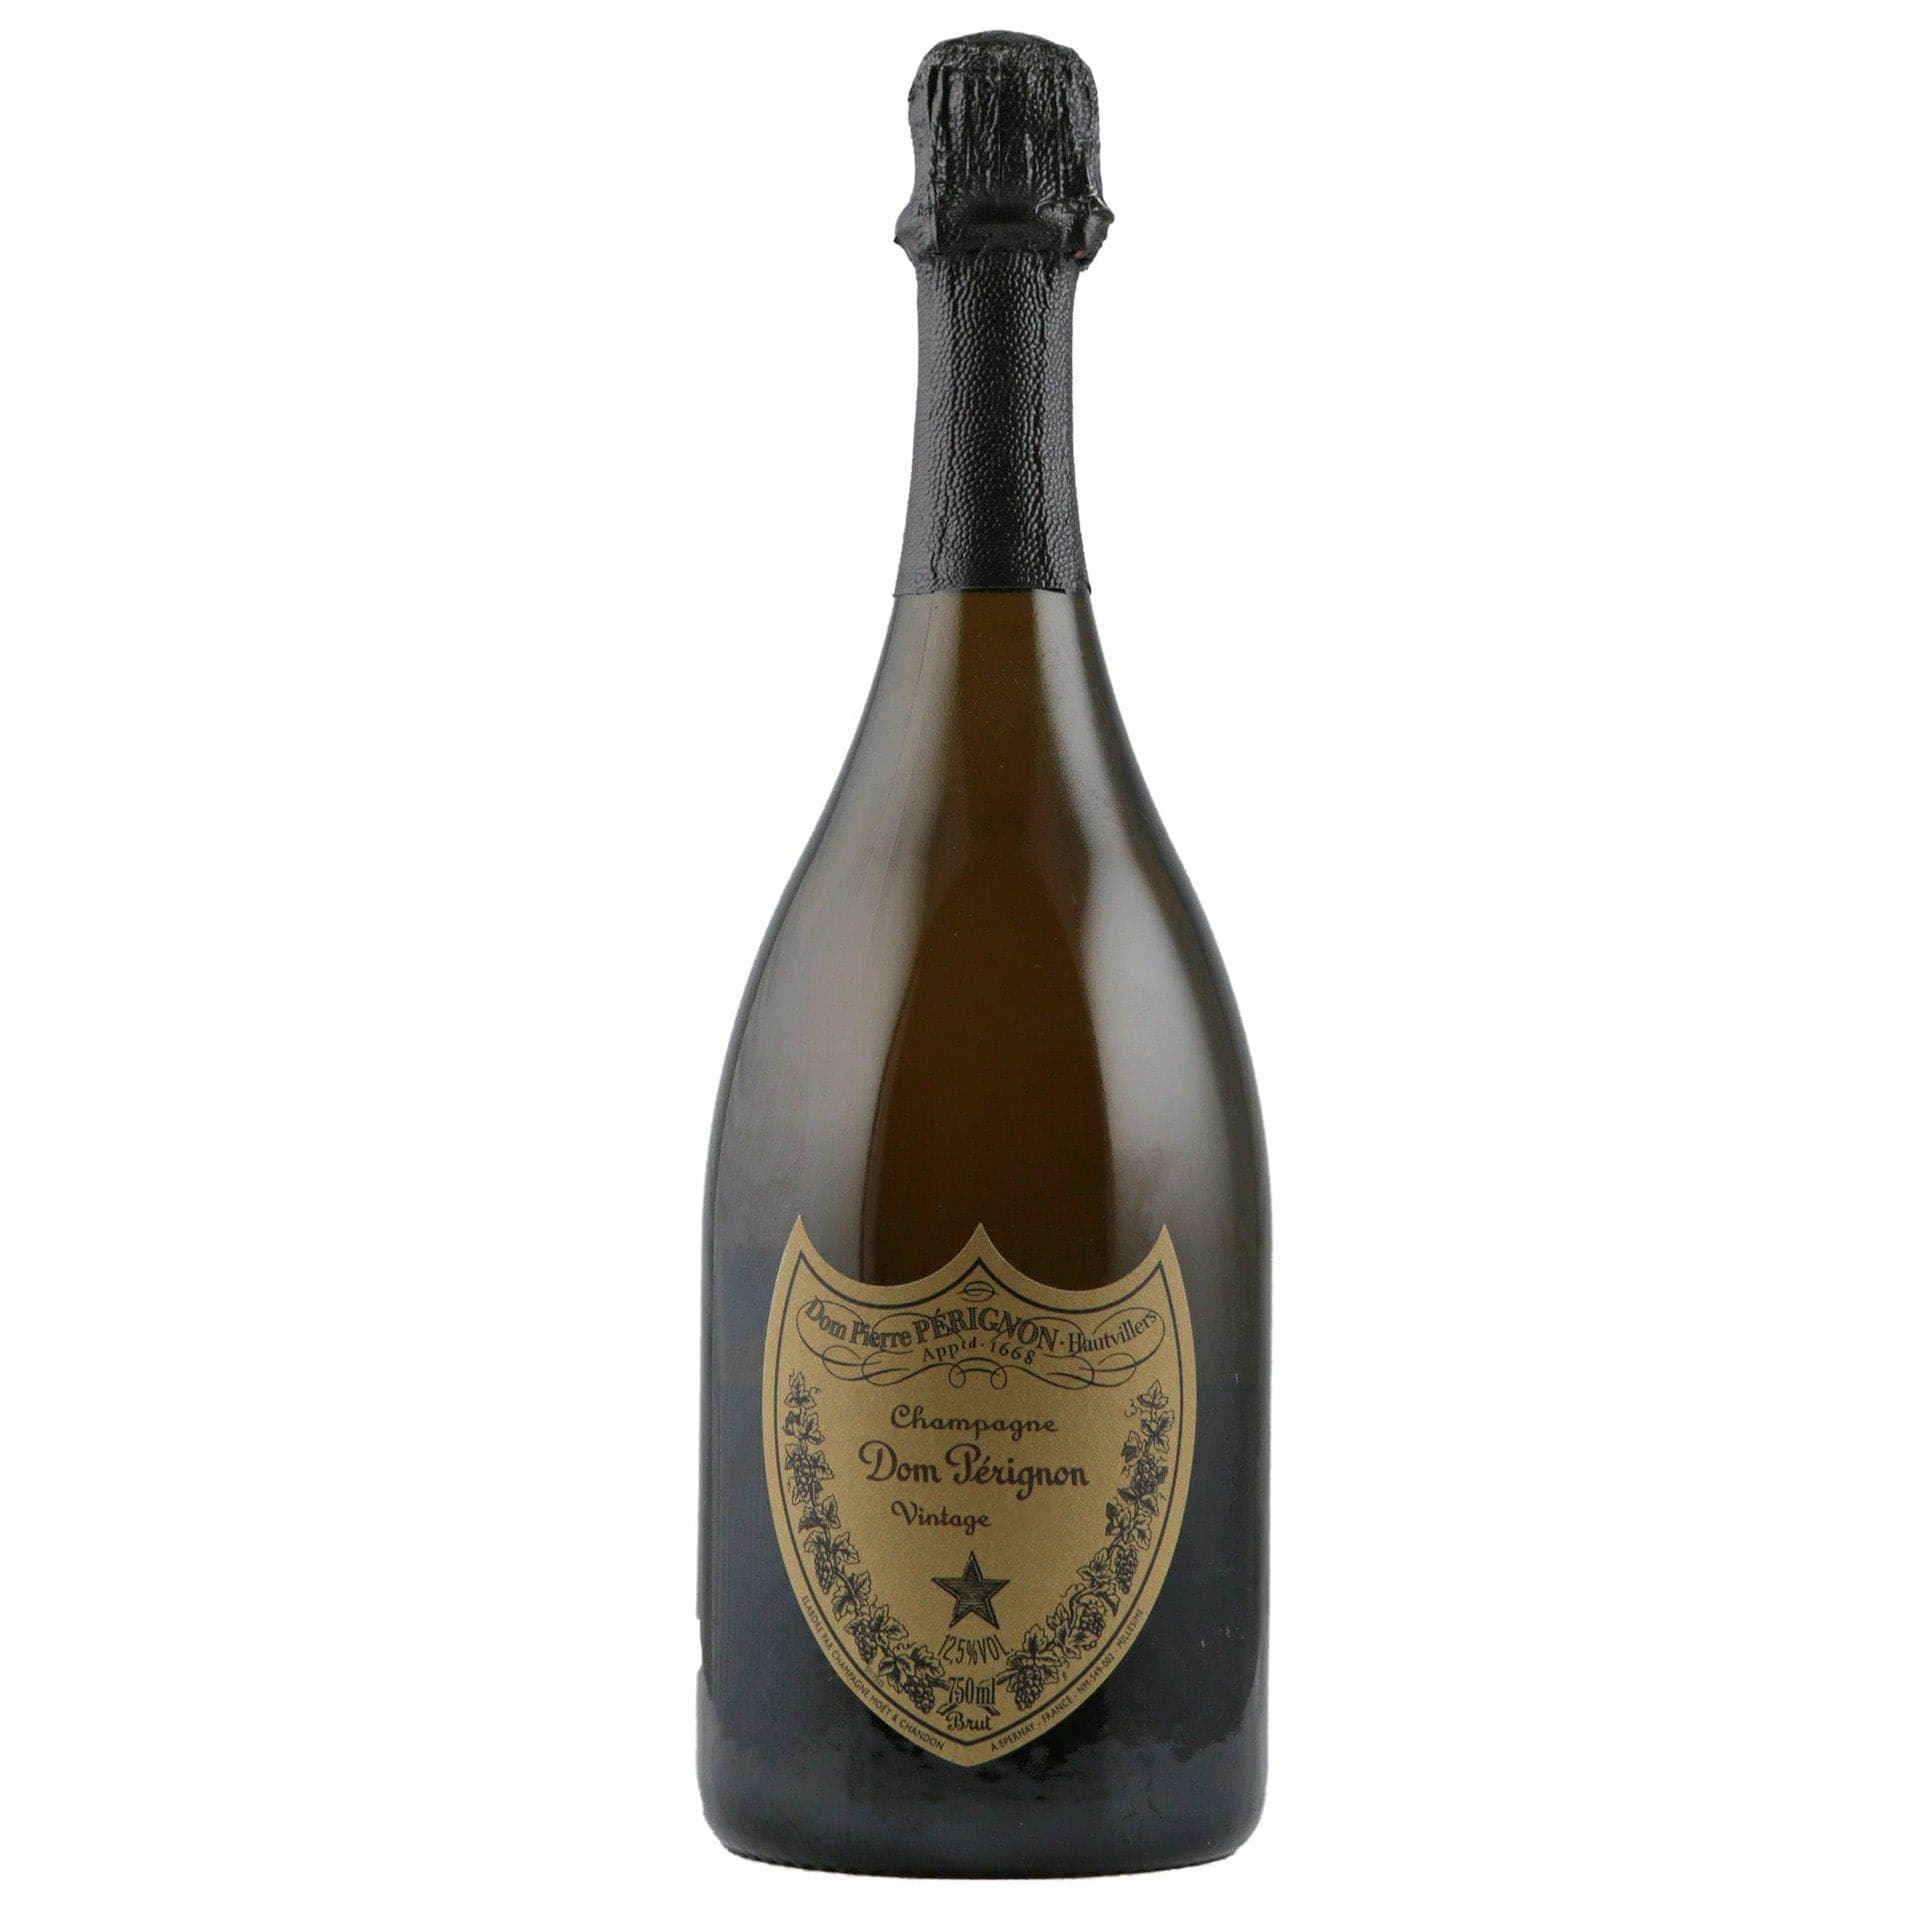 Single bottle of Sparkling wine Dom Perignon, Brut, Champagne, 2004 53% Pinot Noir & 47% Chardonnay